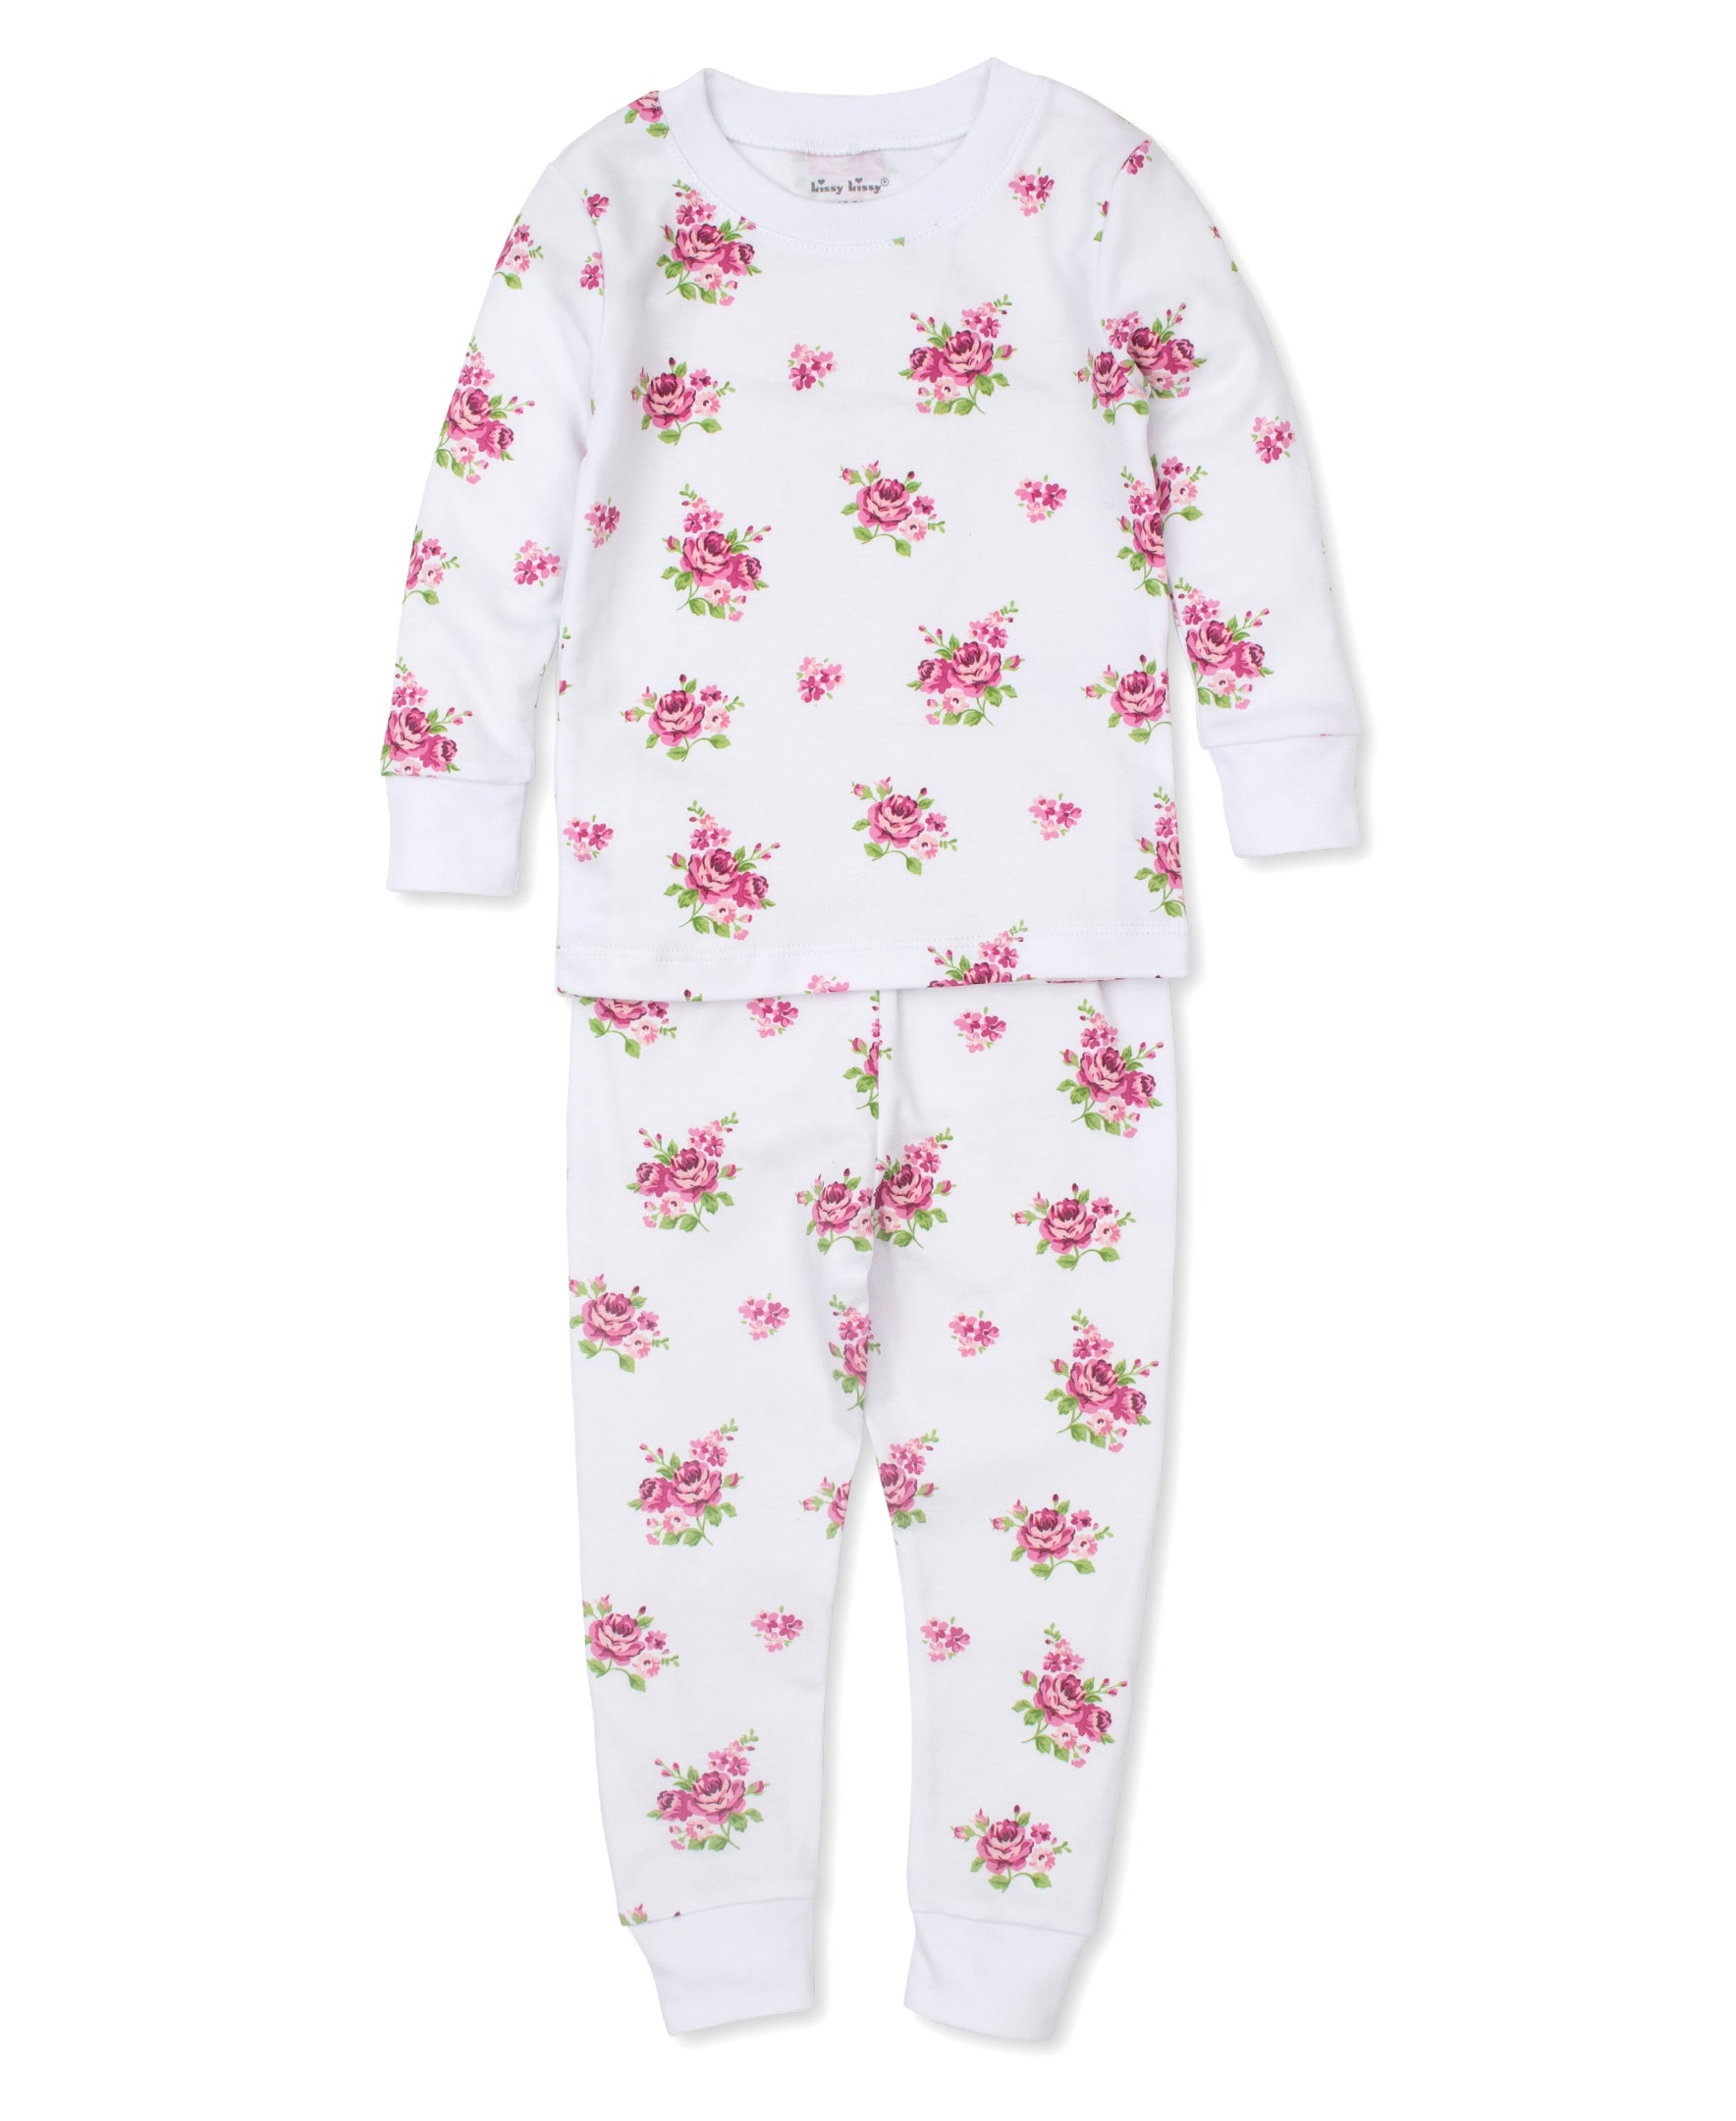 Coming Up Roses Toddler Pajama Set - Kissy Kissy